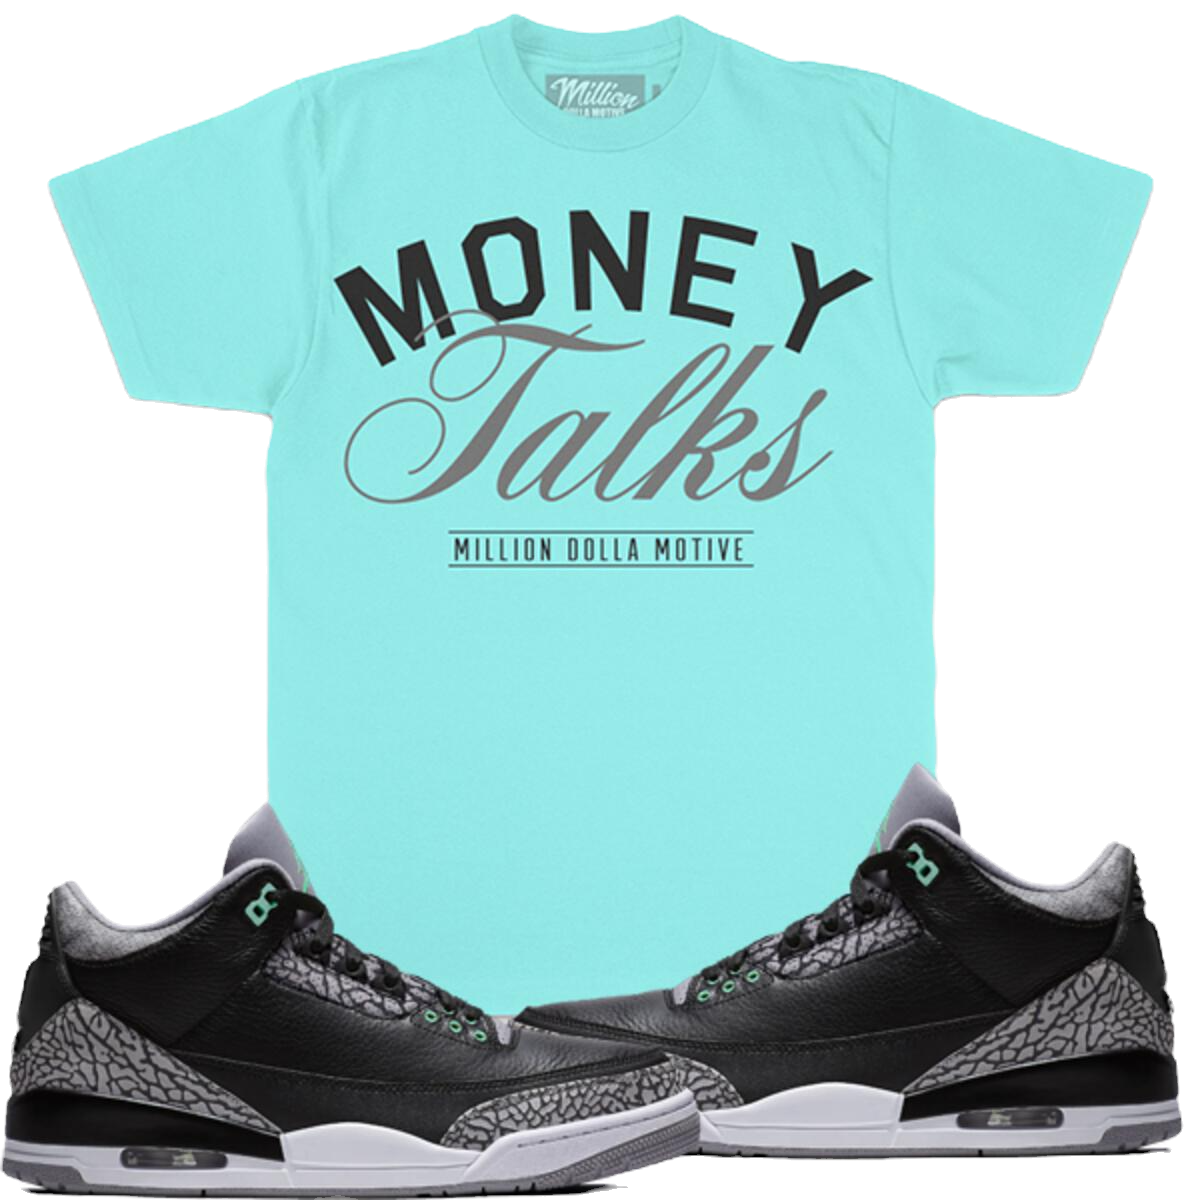 Money Talks T Shirt